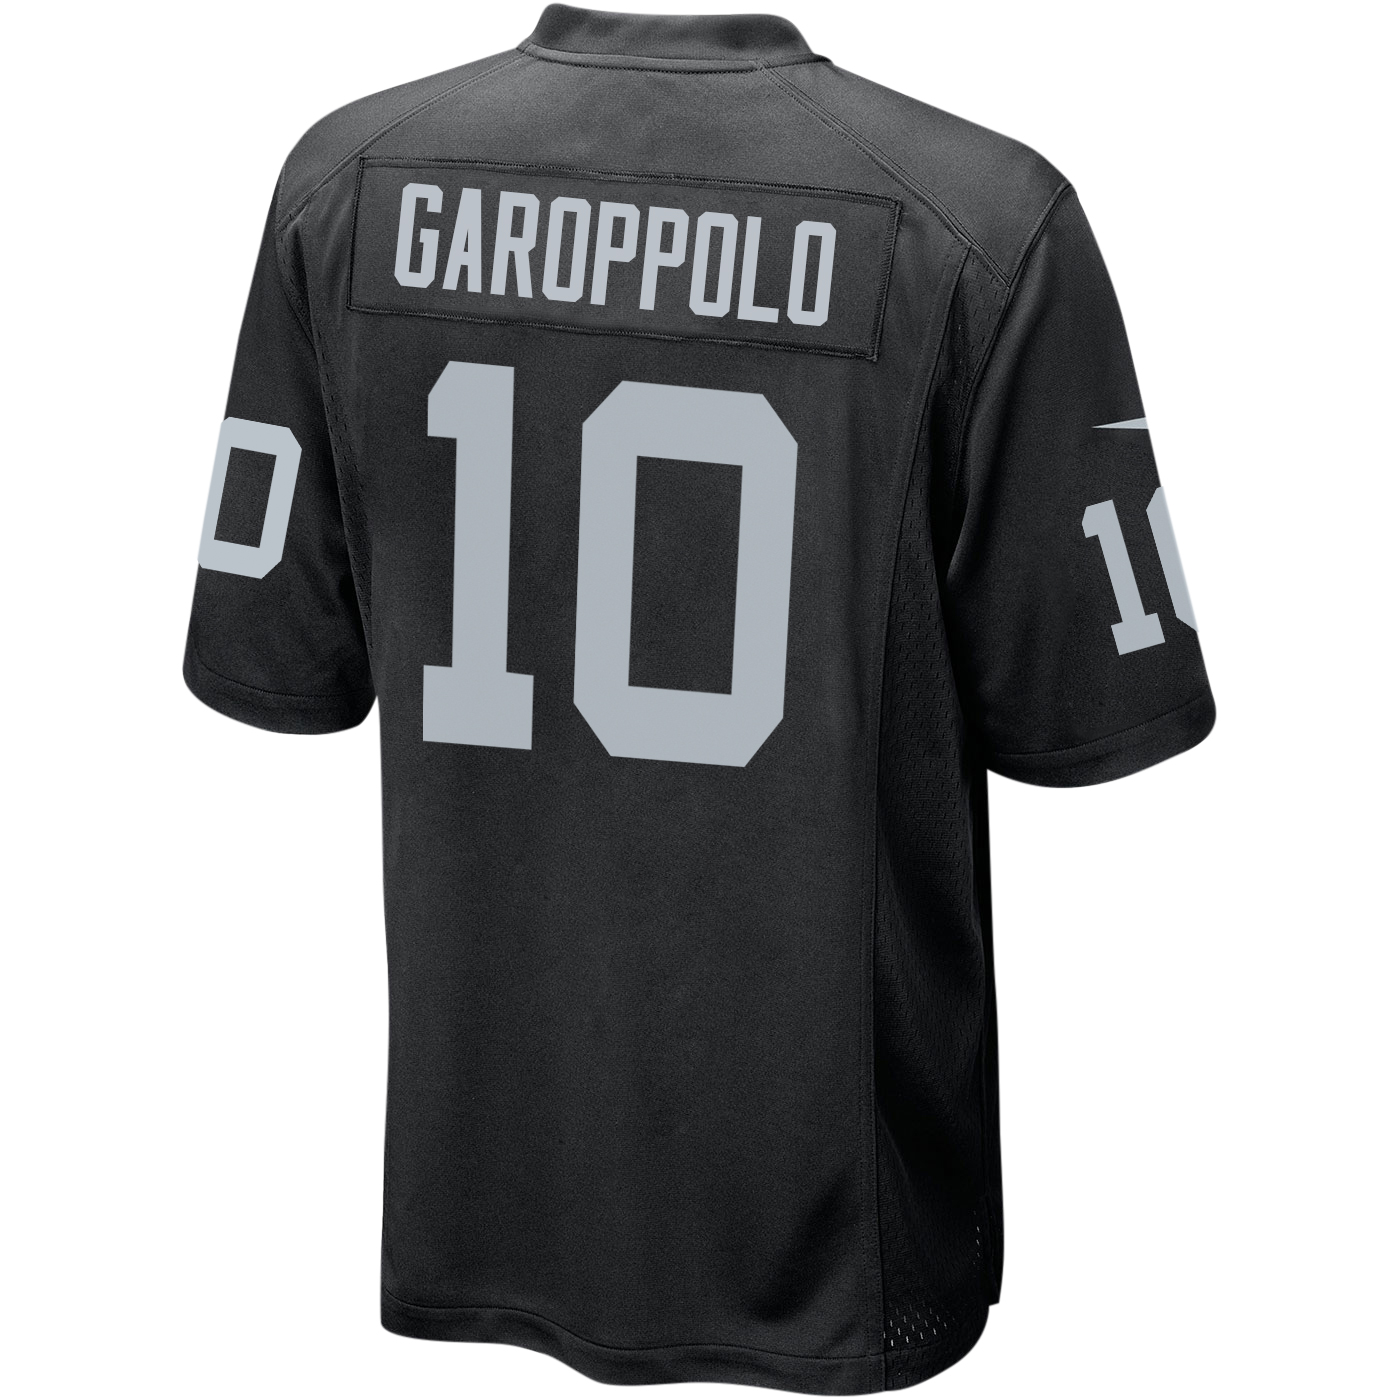 garoppolo black jersey